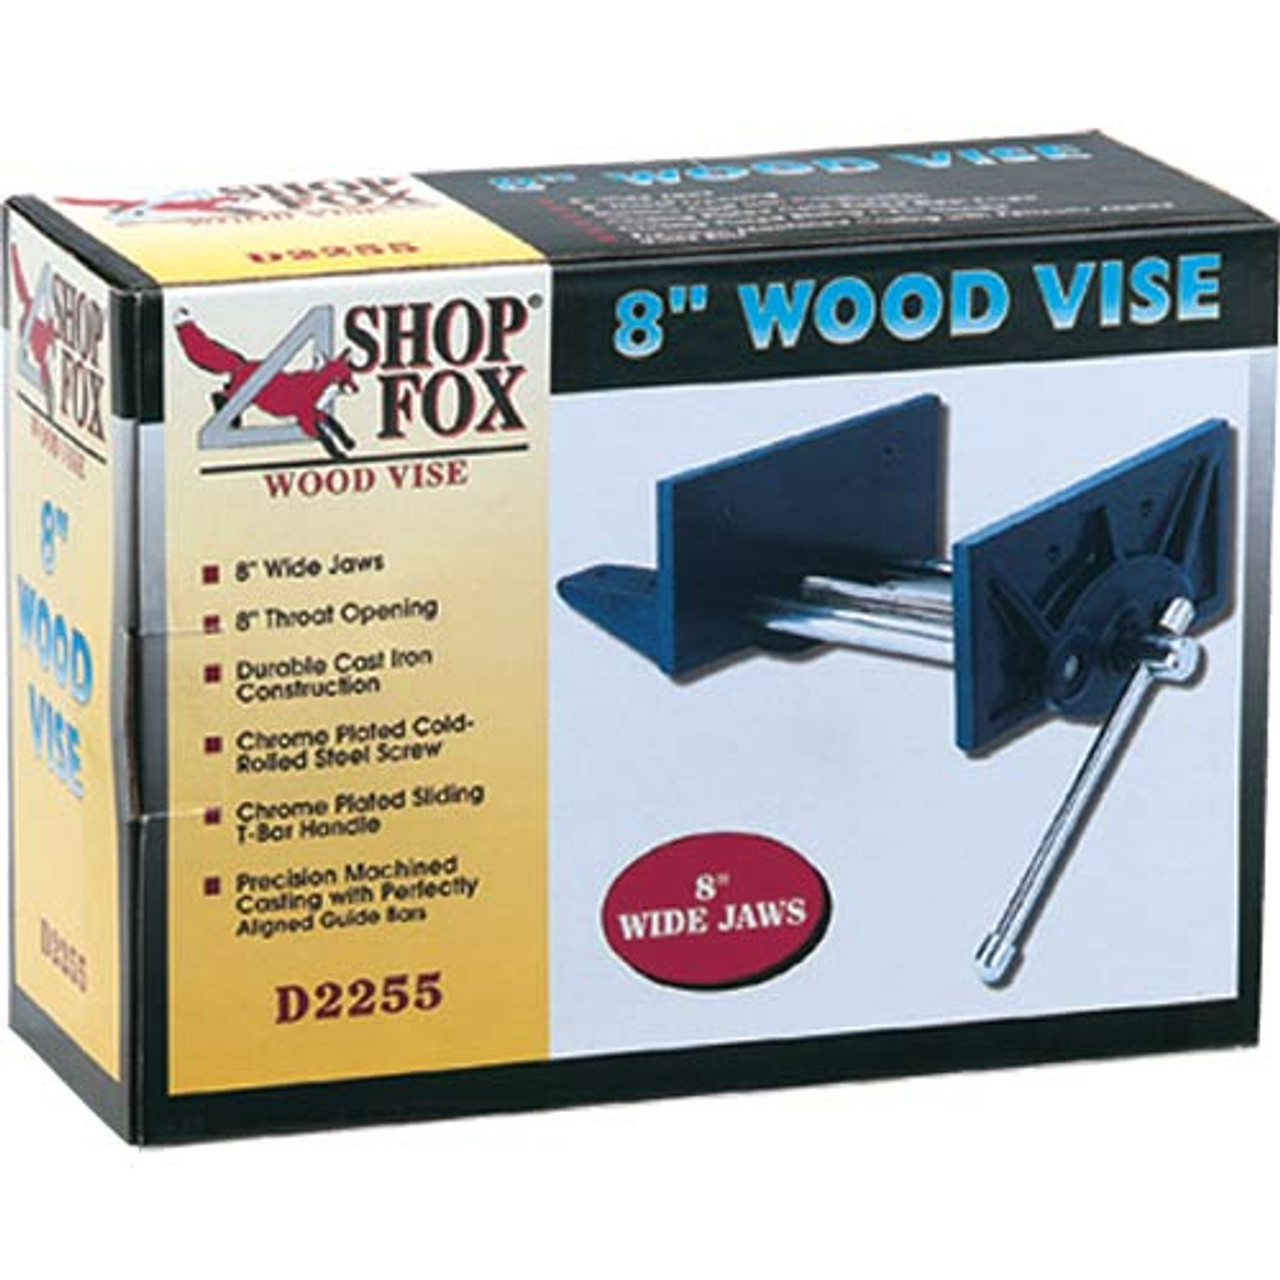 Woodstock Shop Fox 8" Wood Vise D2255